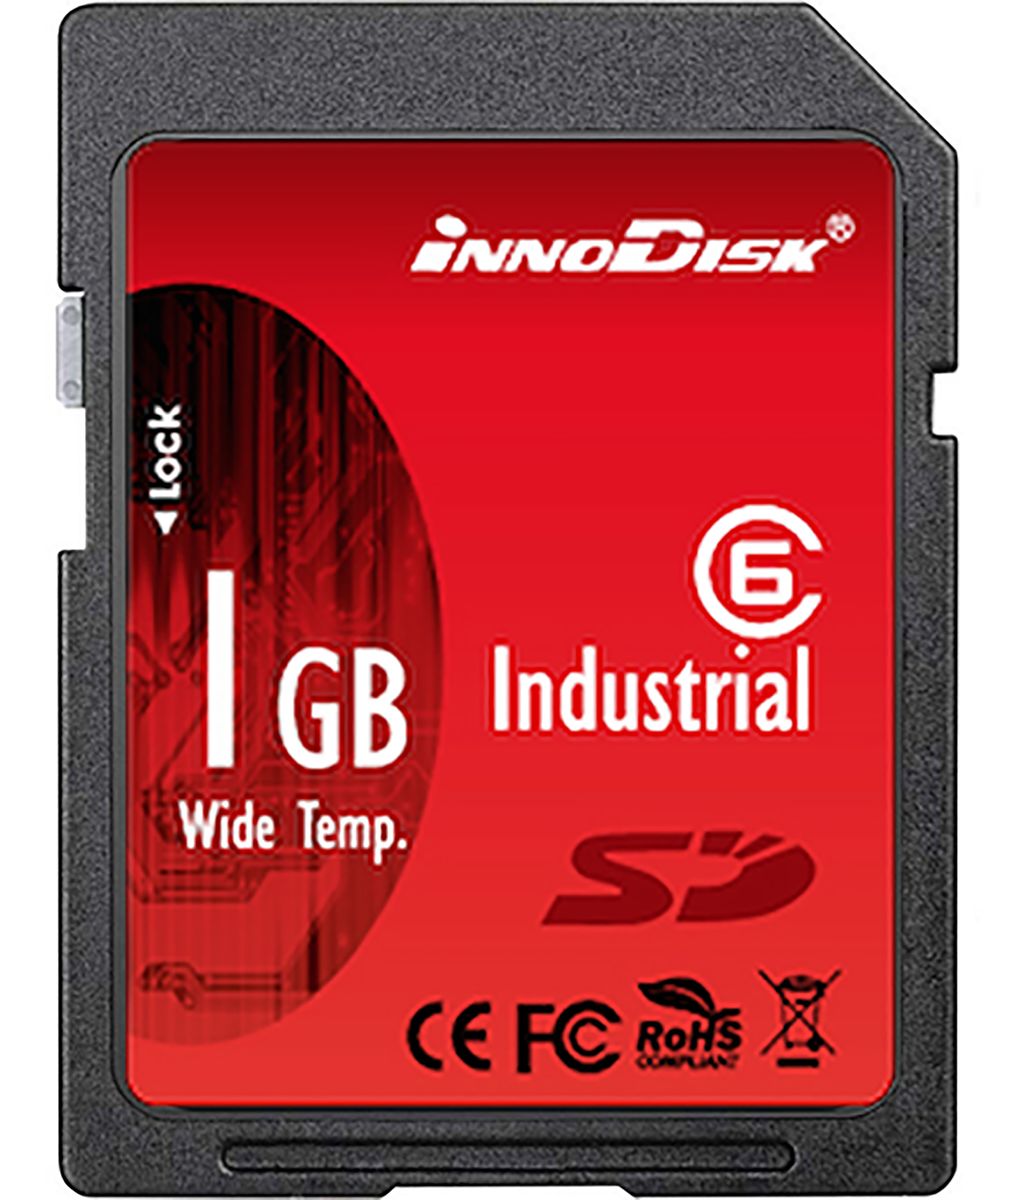 InnoDisk 1 GB Industrial SD SD Card, Class 6